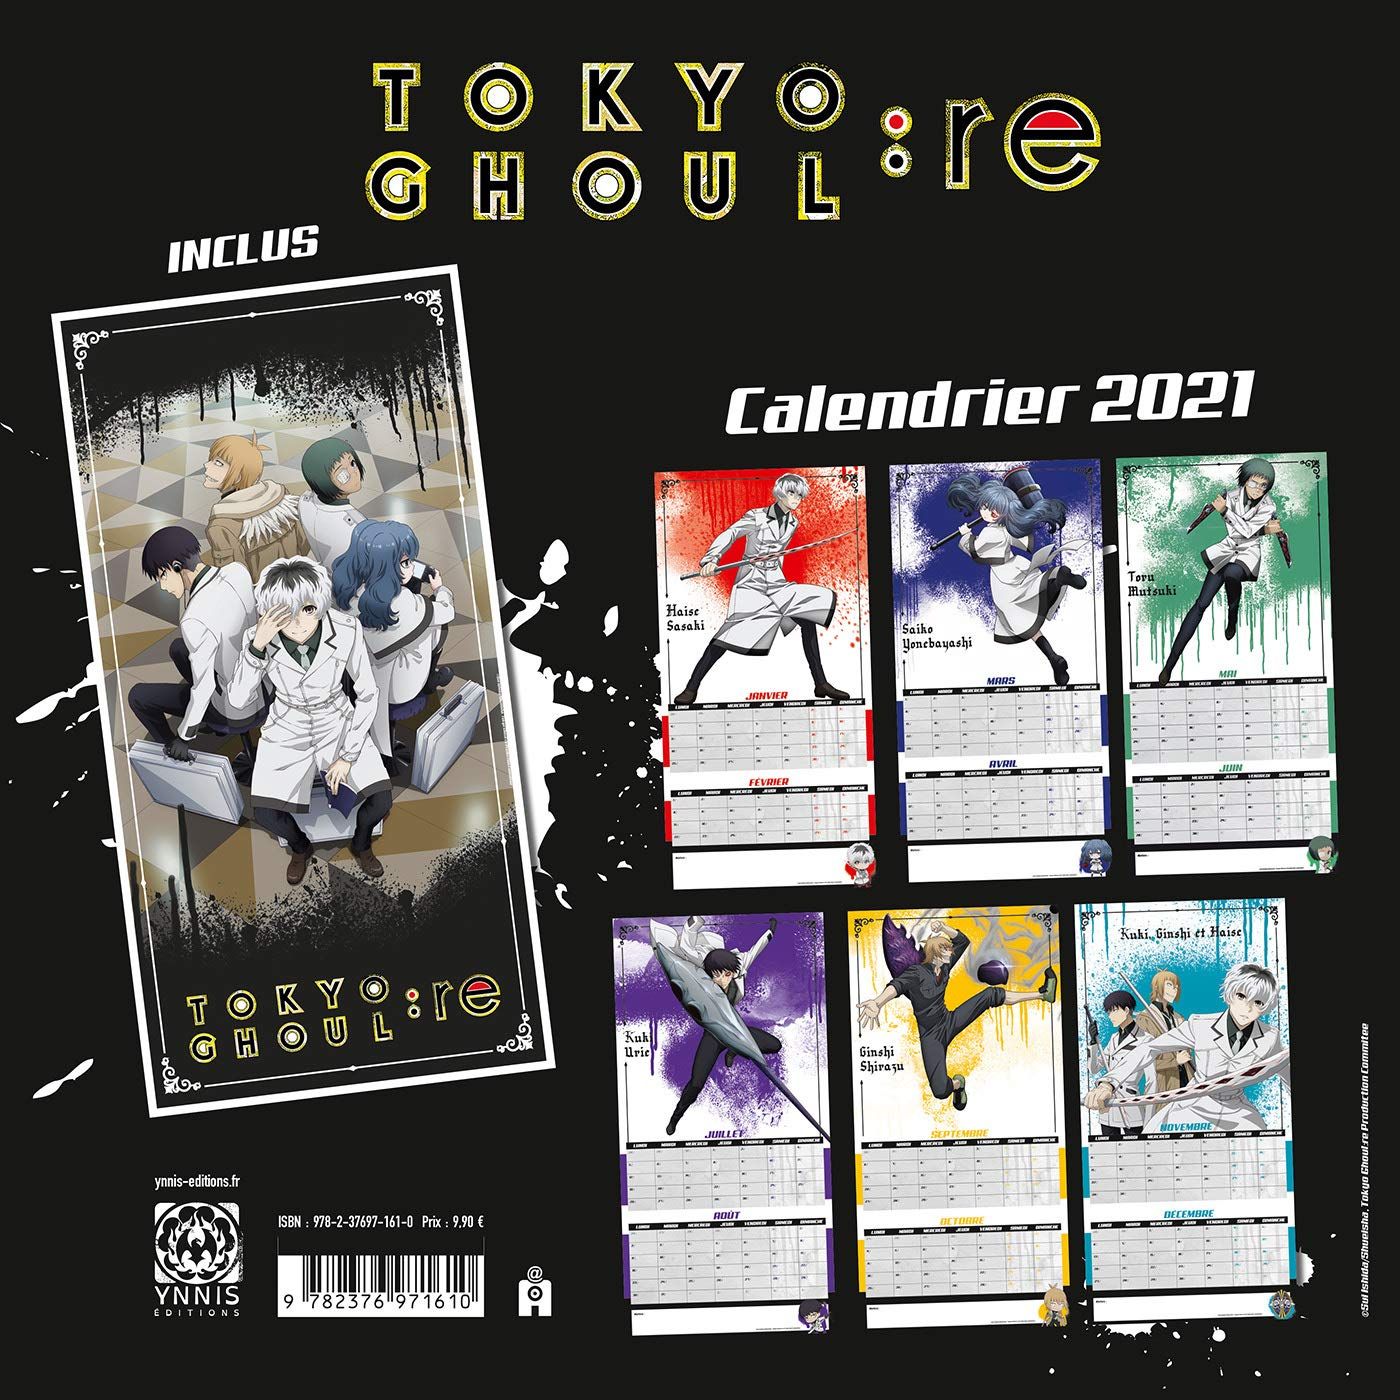 Goodie Tokyo Ghoul:Re - Calendrier 2021 - Ynnis - Manga news